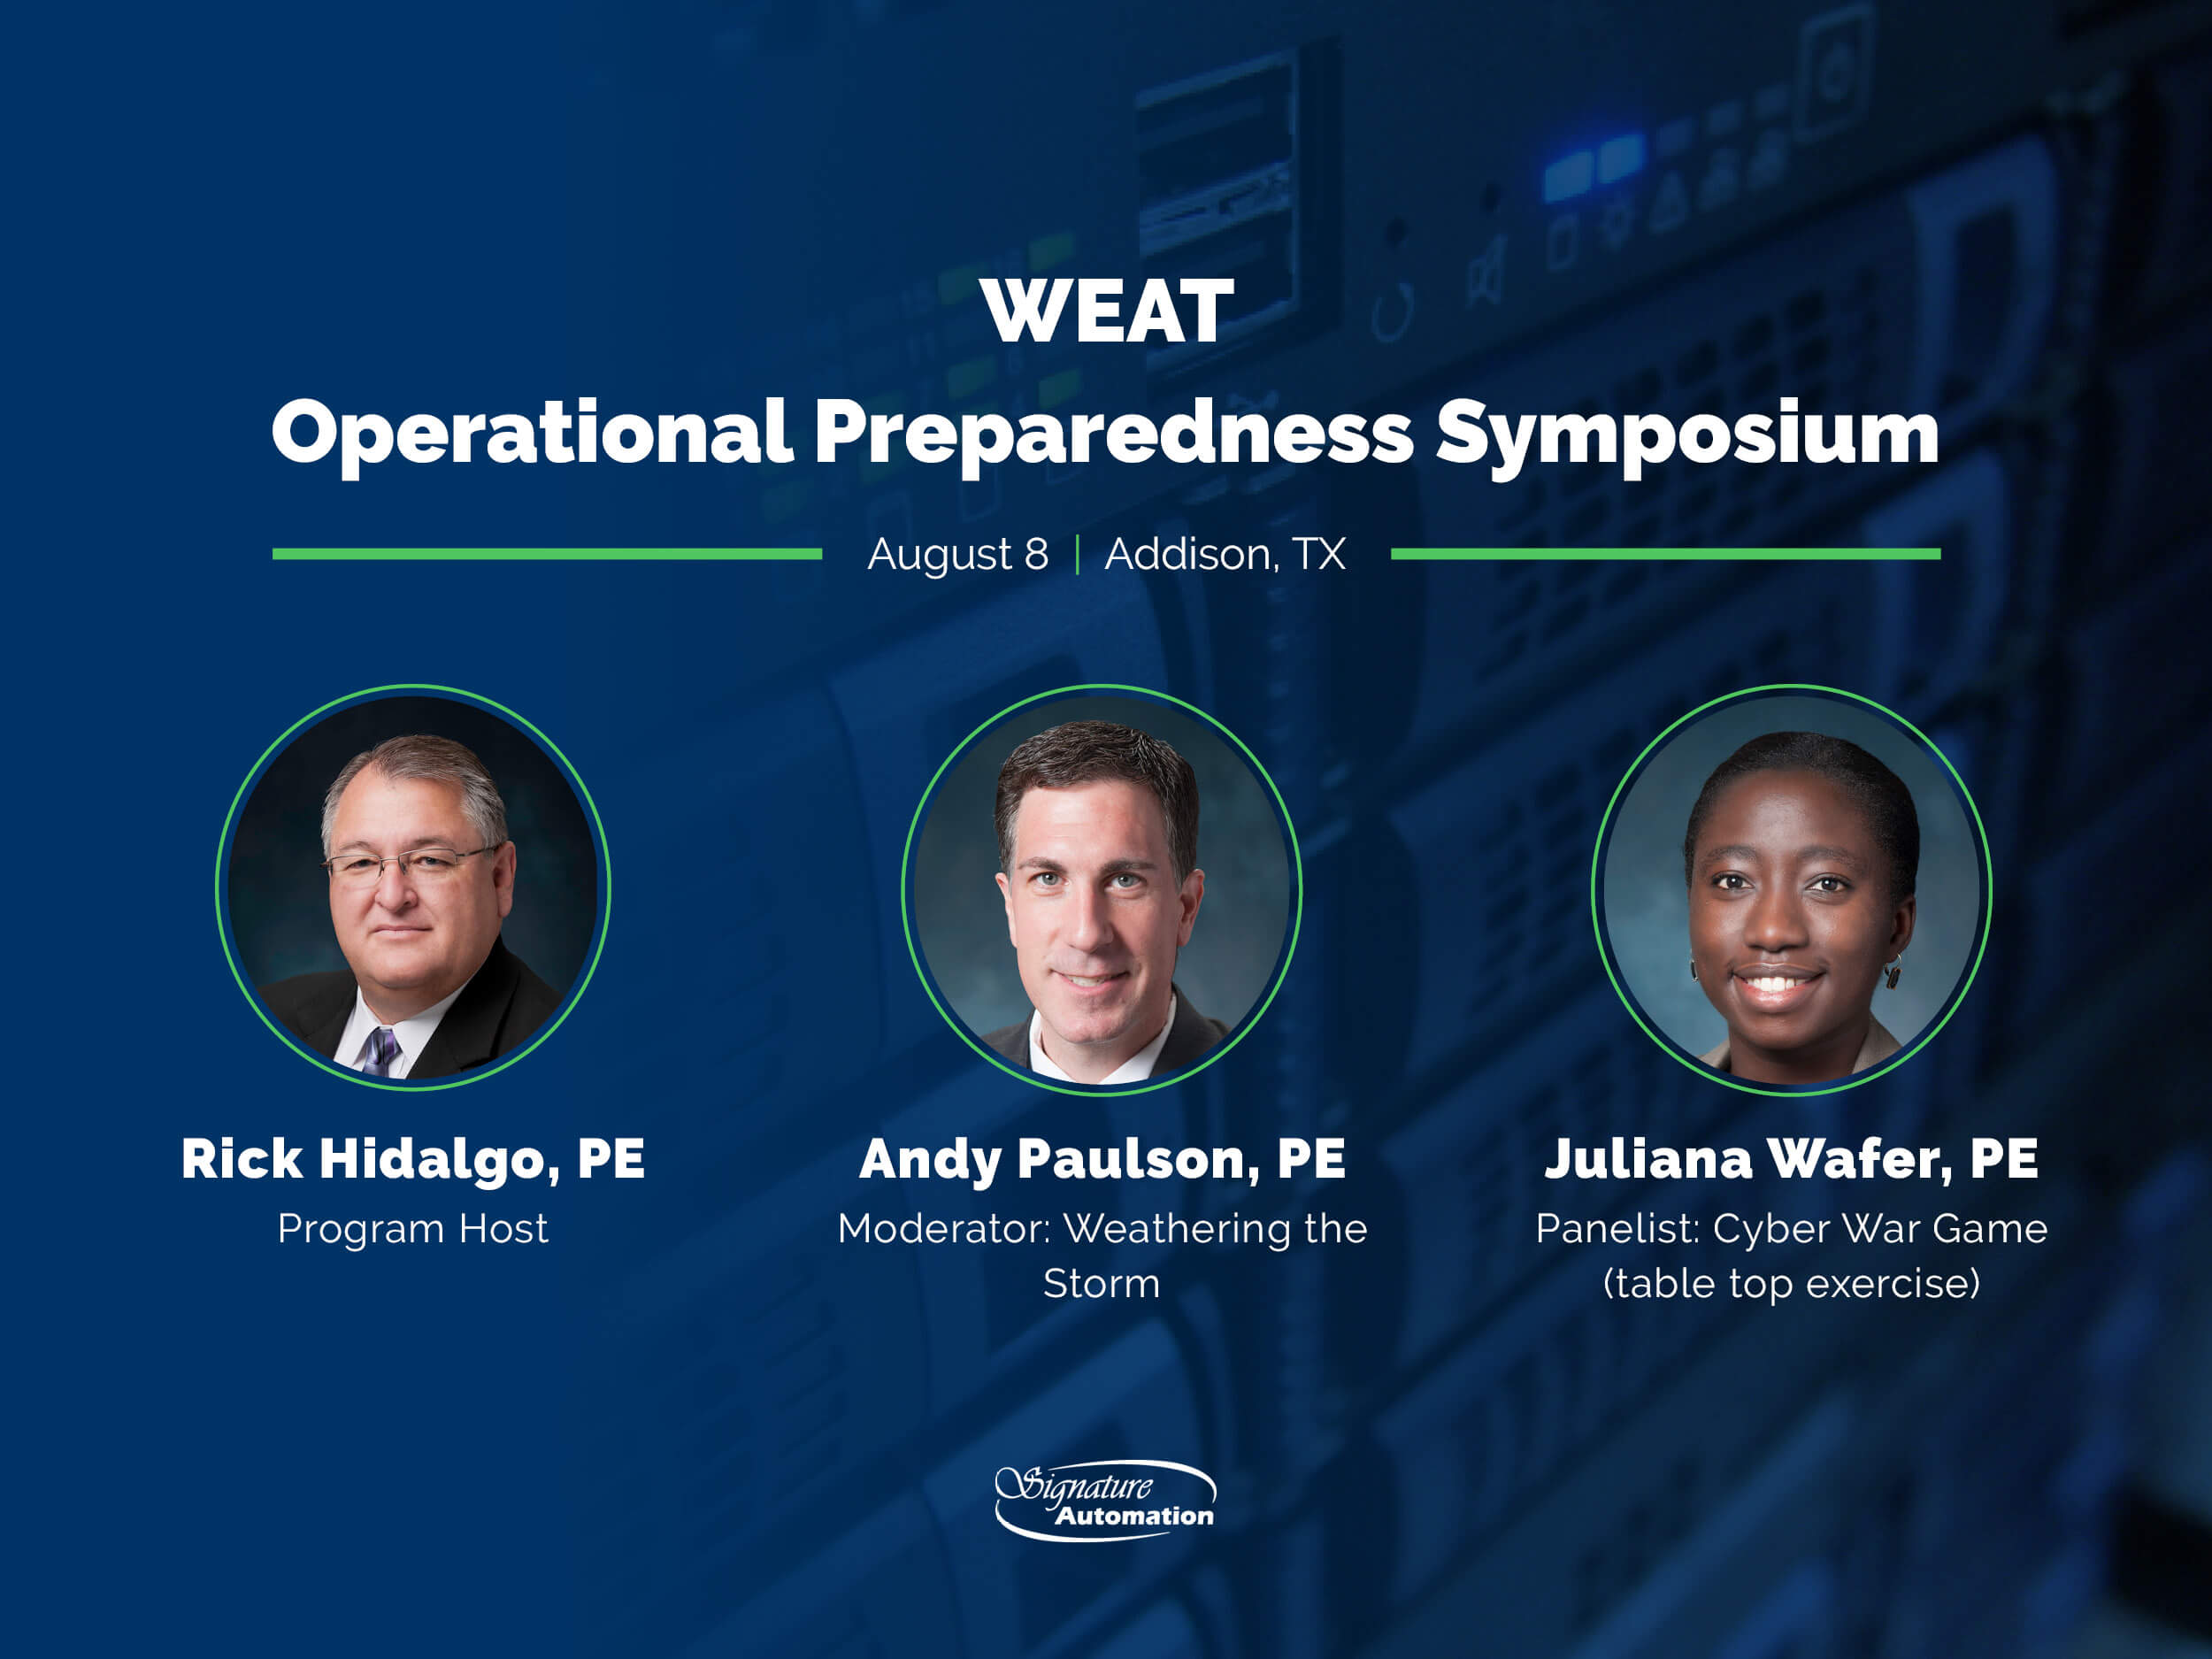 WEAT Operational Preparedness Symposium on August 8, 2018